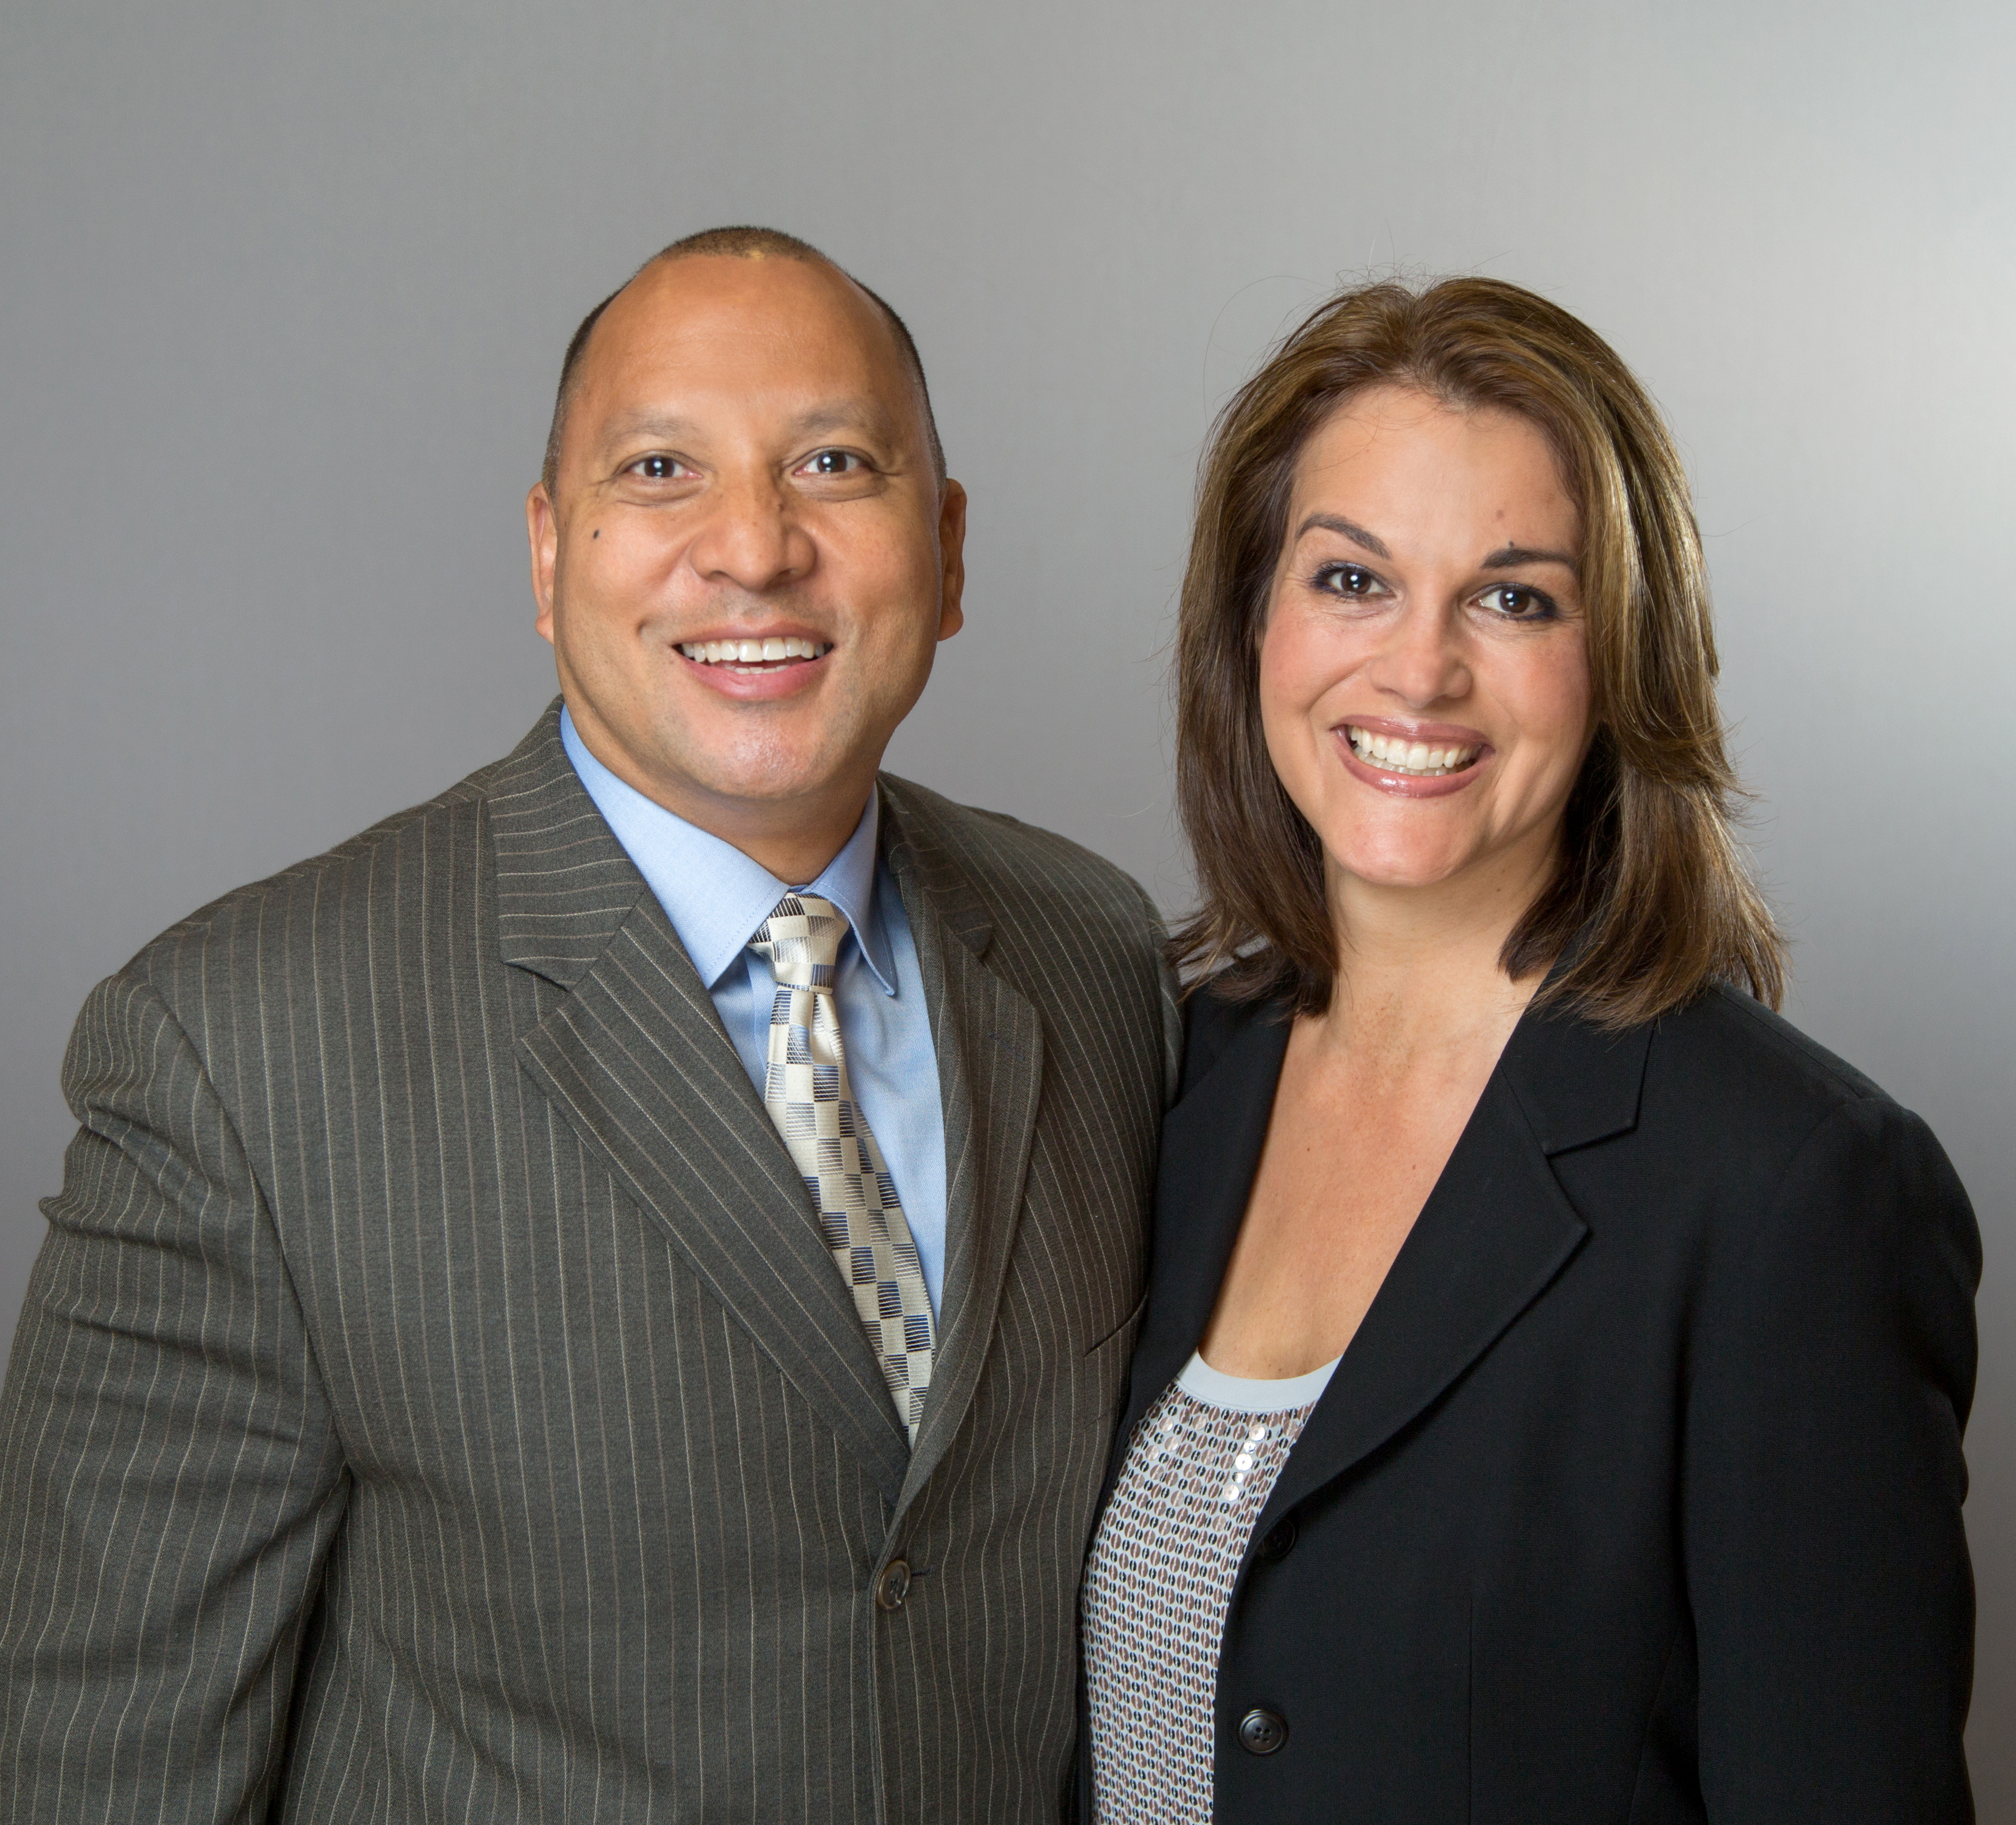 Bonvera Profiles in Leadership: Mark & Raquel Williams